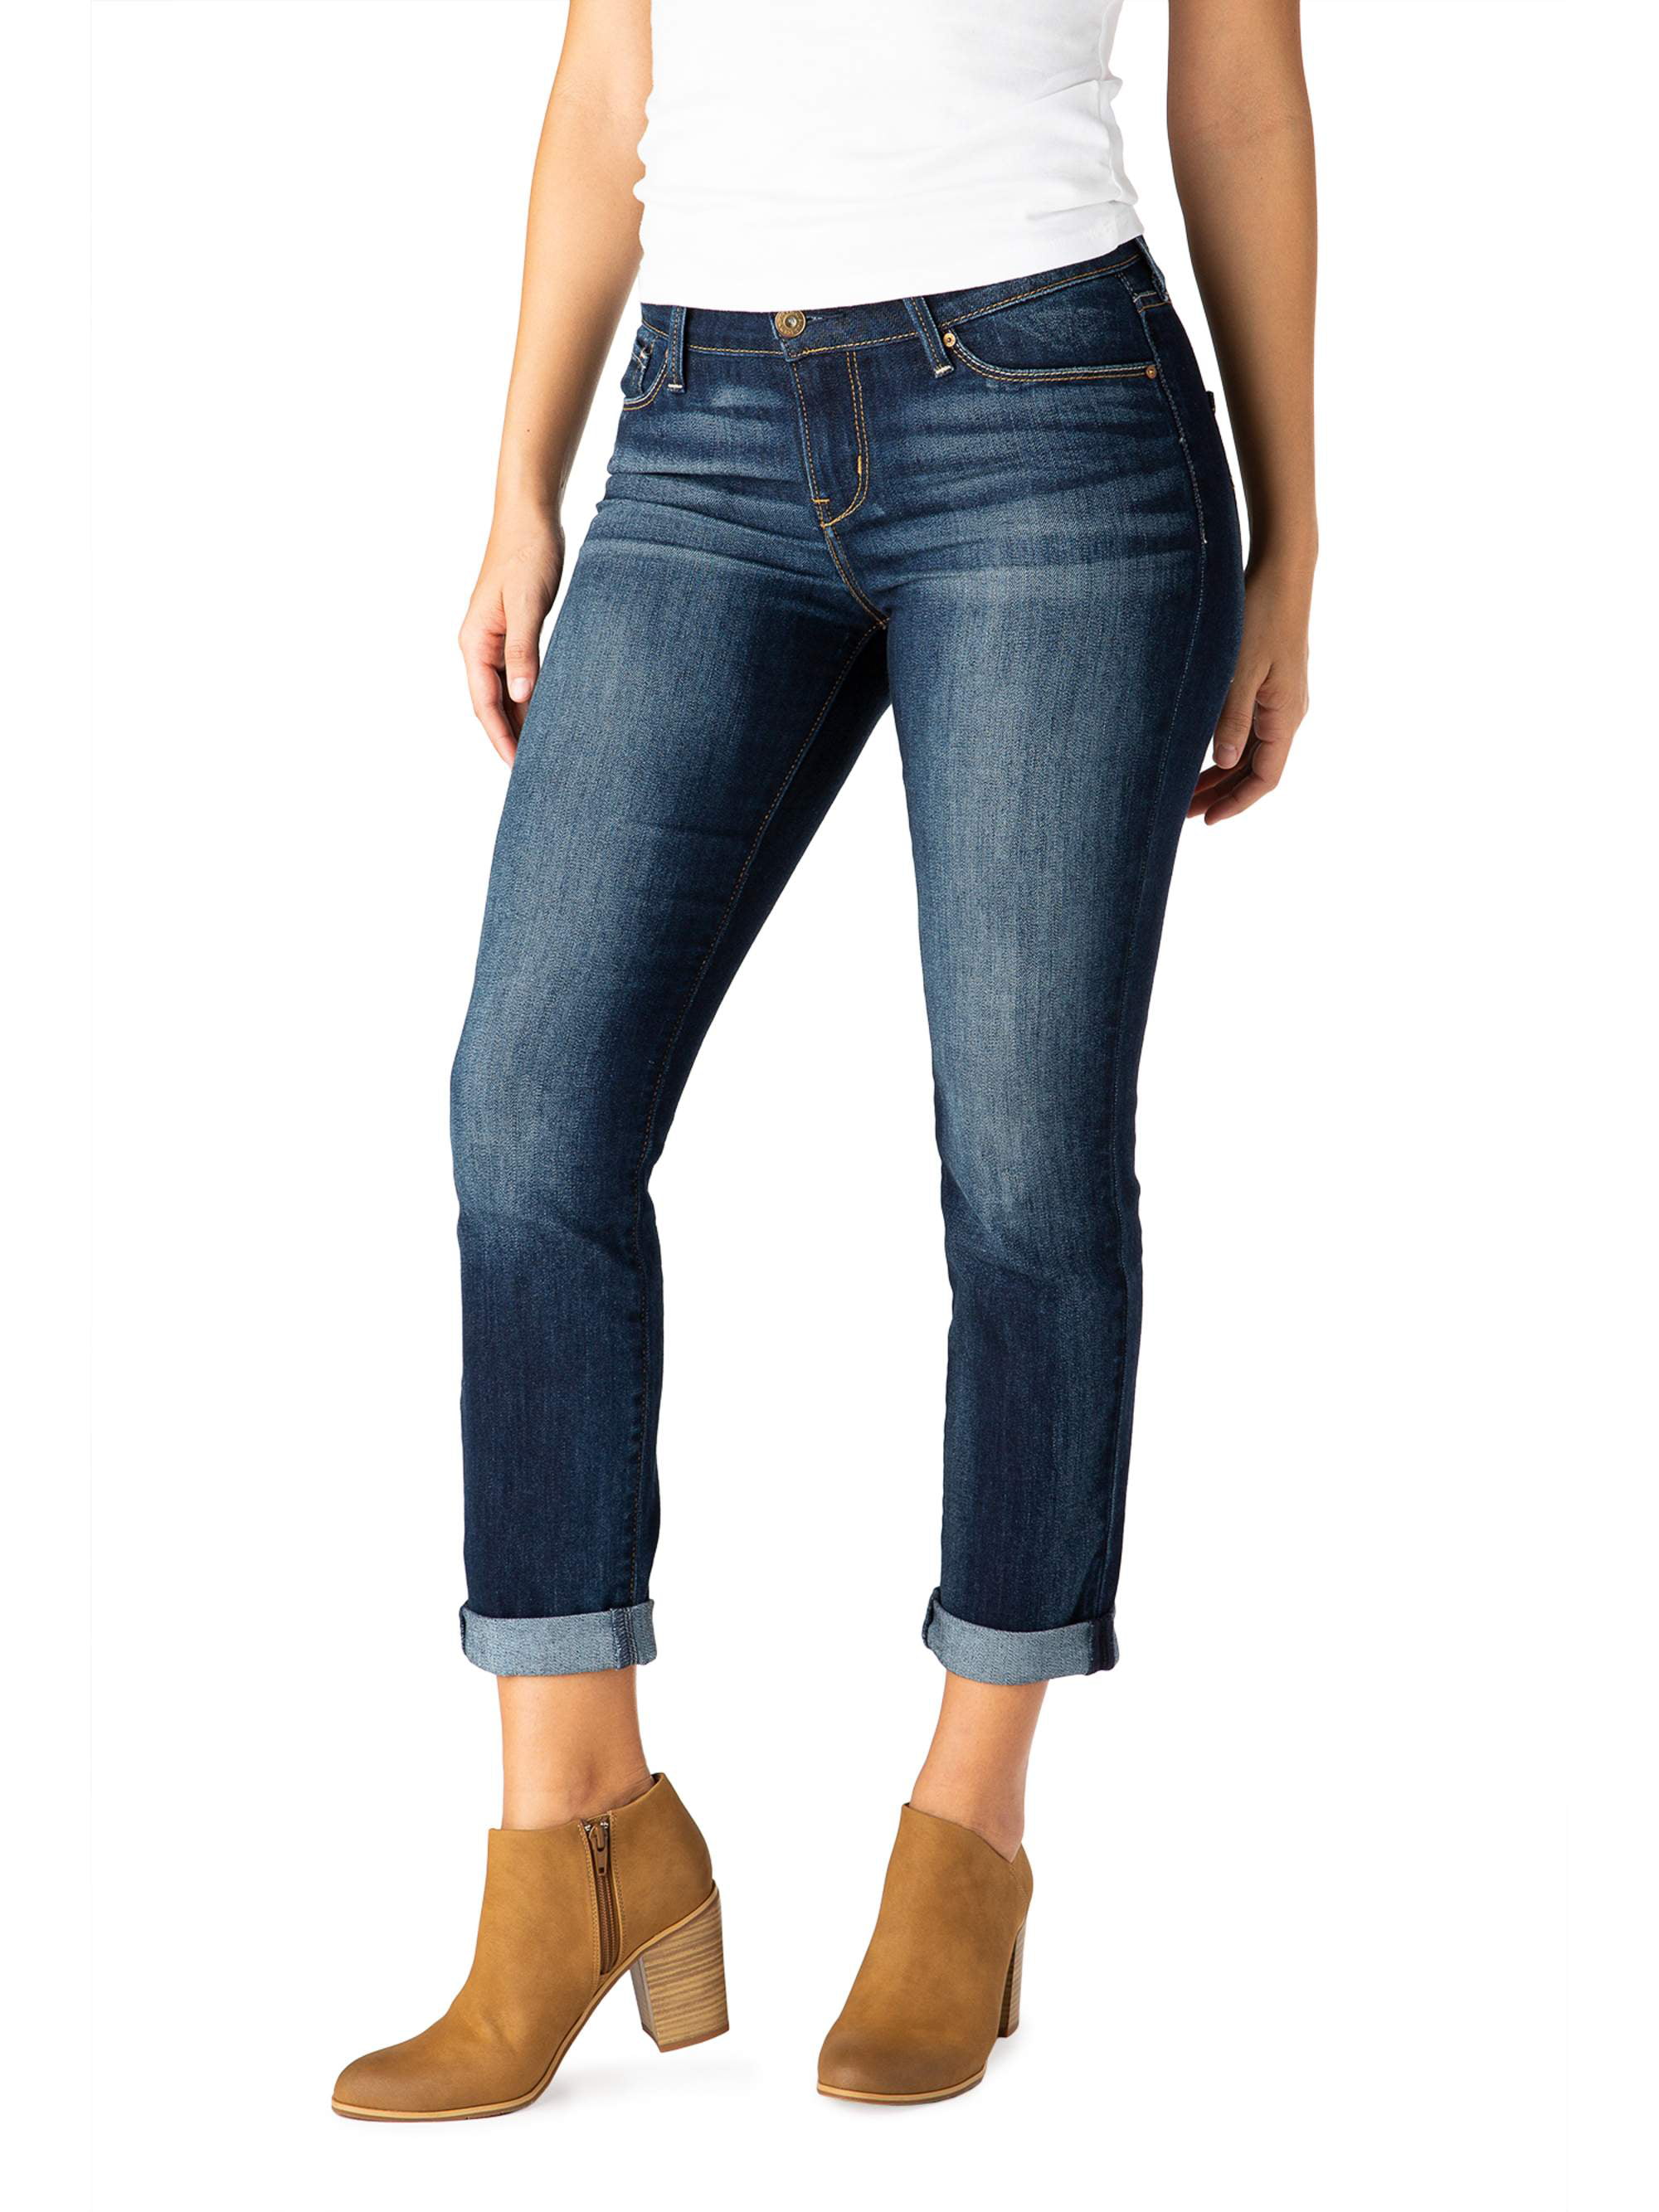 Descubrir 82+ imagen levi's modern slim cuffed jeans - Thptnganamst.edu.vn